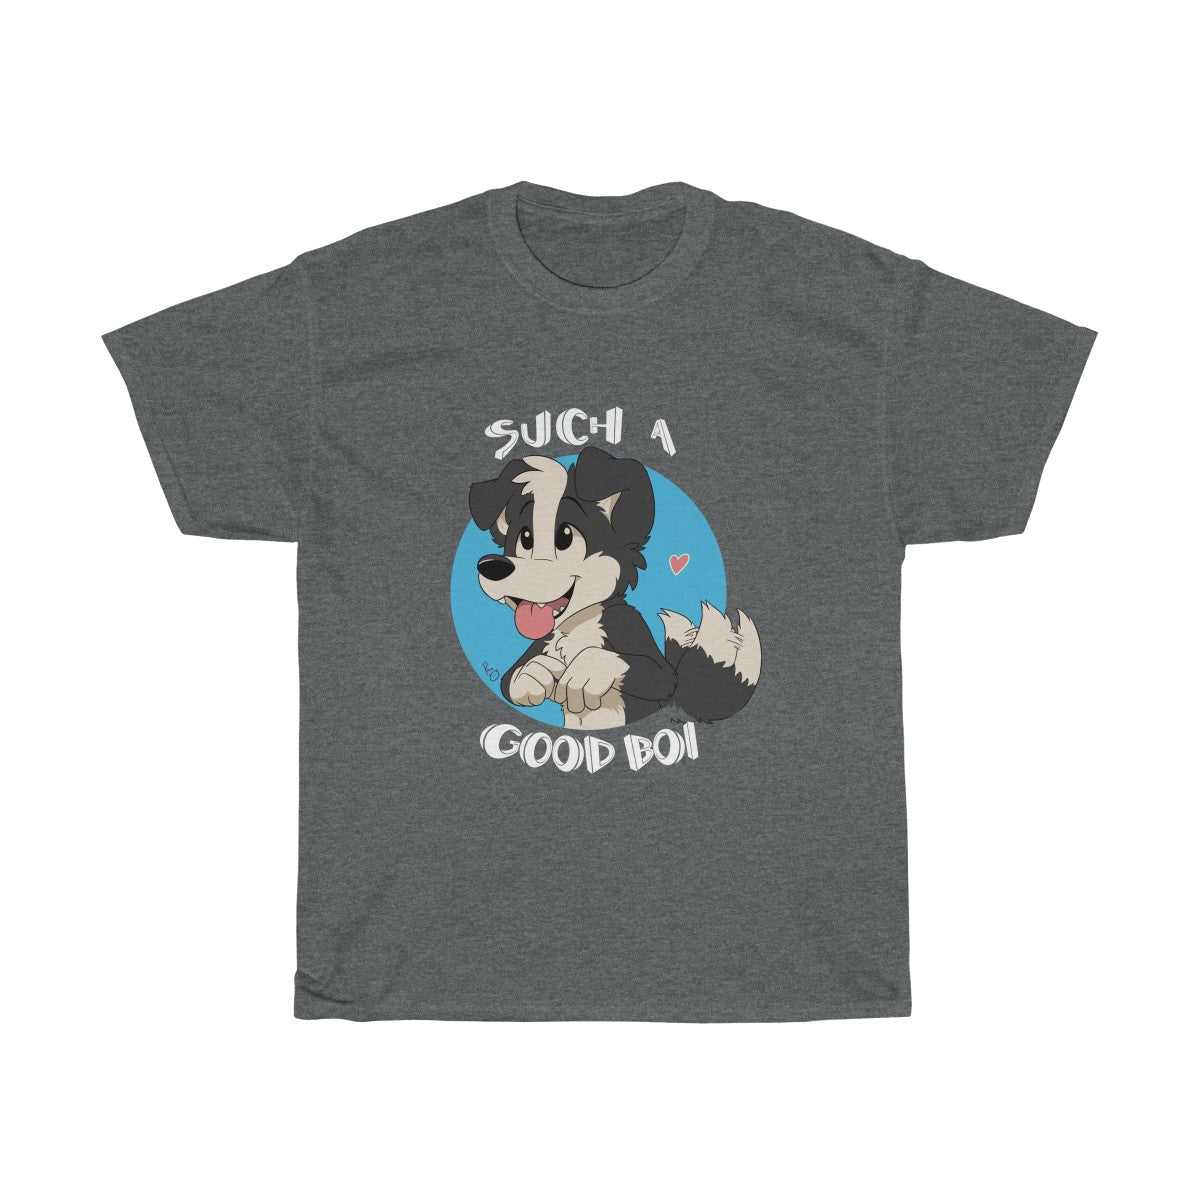 Such a Good Boy - T-Shirt T-Shirt Paco Panda Dark Heather S 